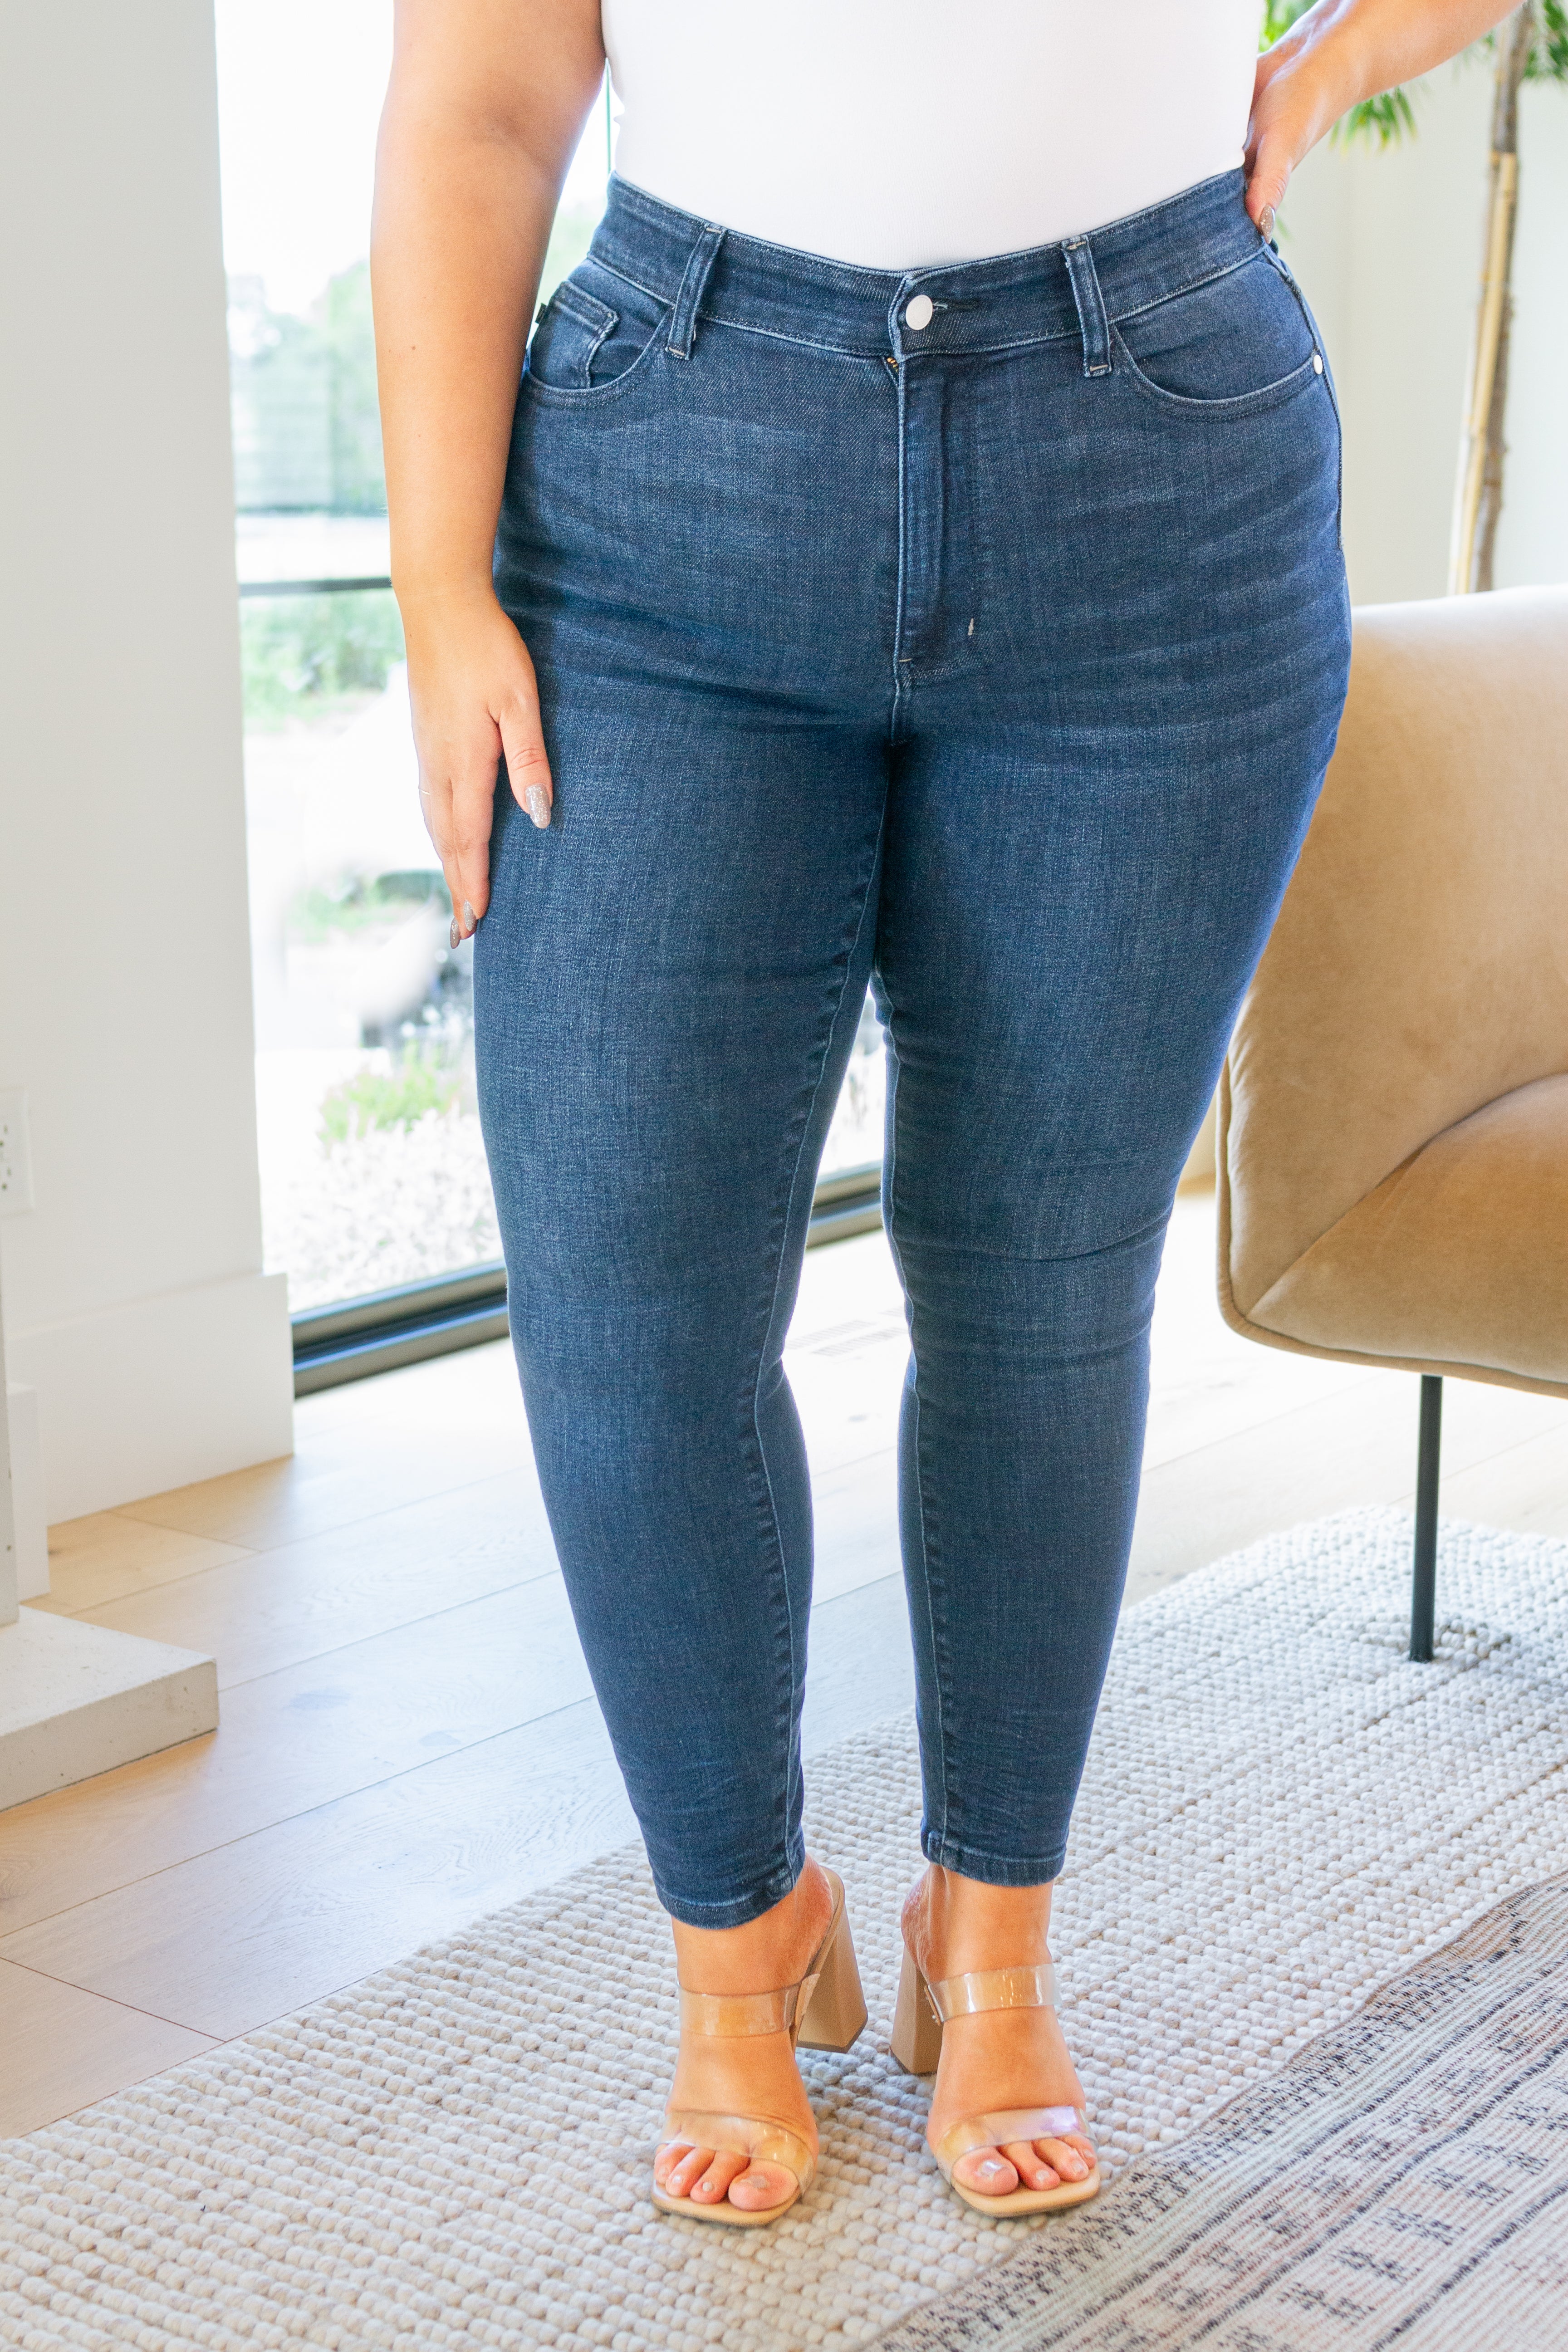 Judy Blue Addison Mid Rise Crinkle Ankle Skinny Jeans Denim Jeans by Vim&vigor | Vim&Vigor Boutique